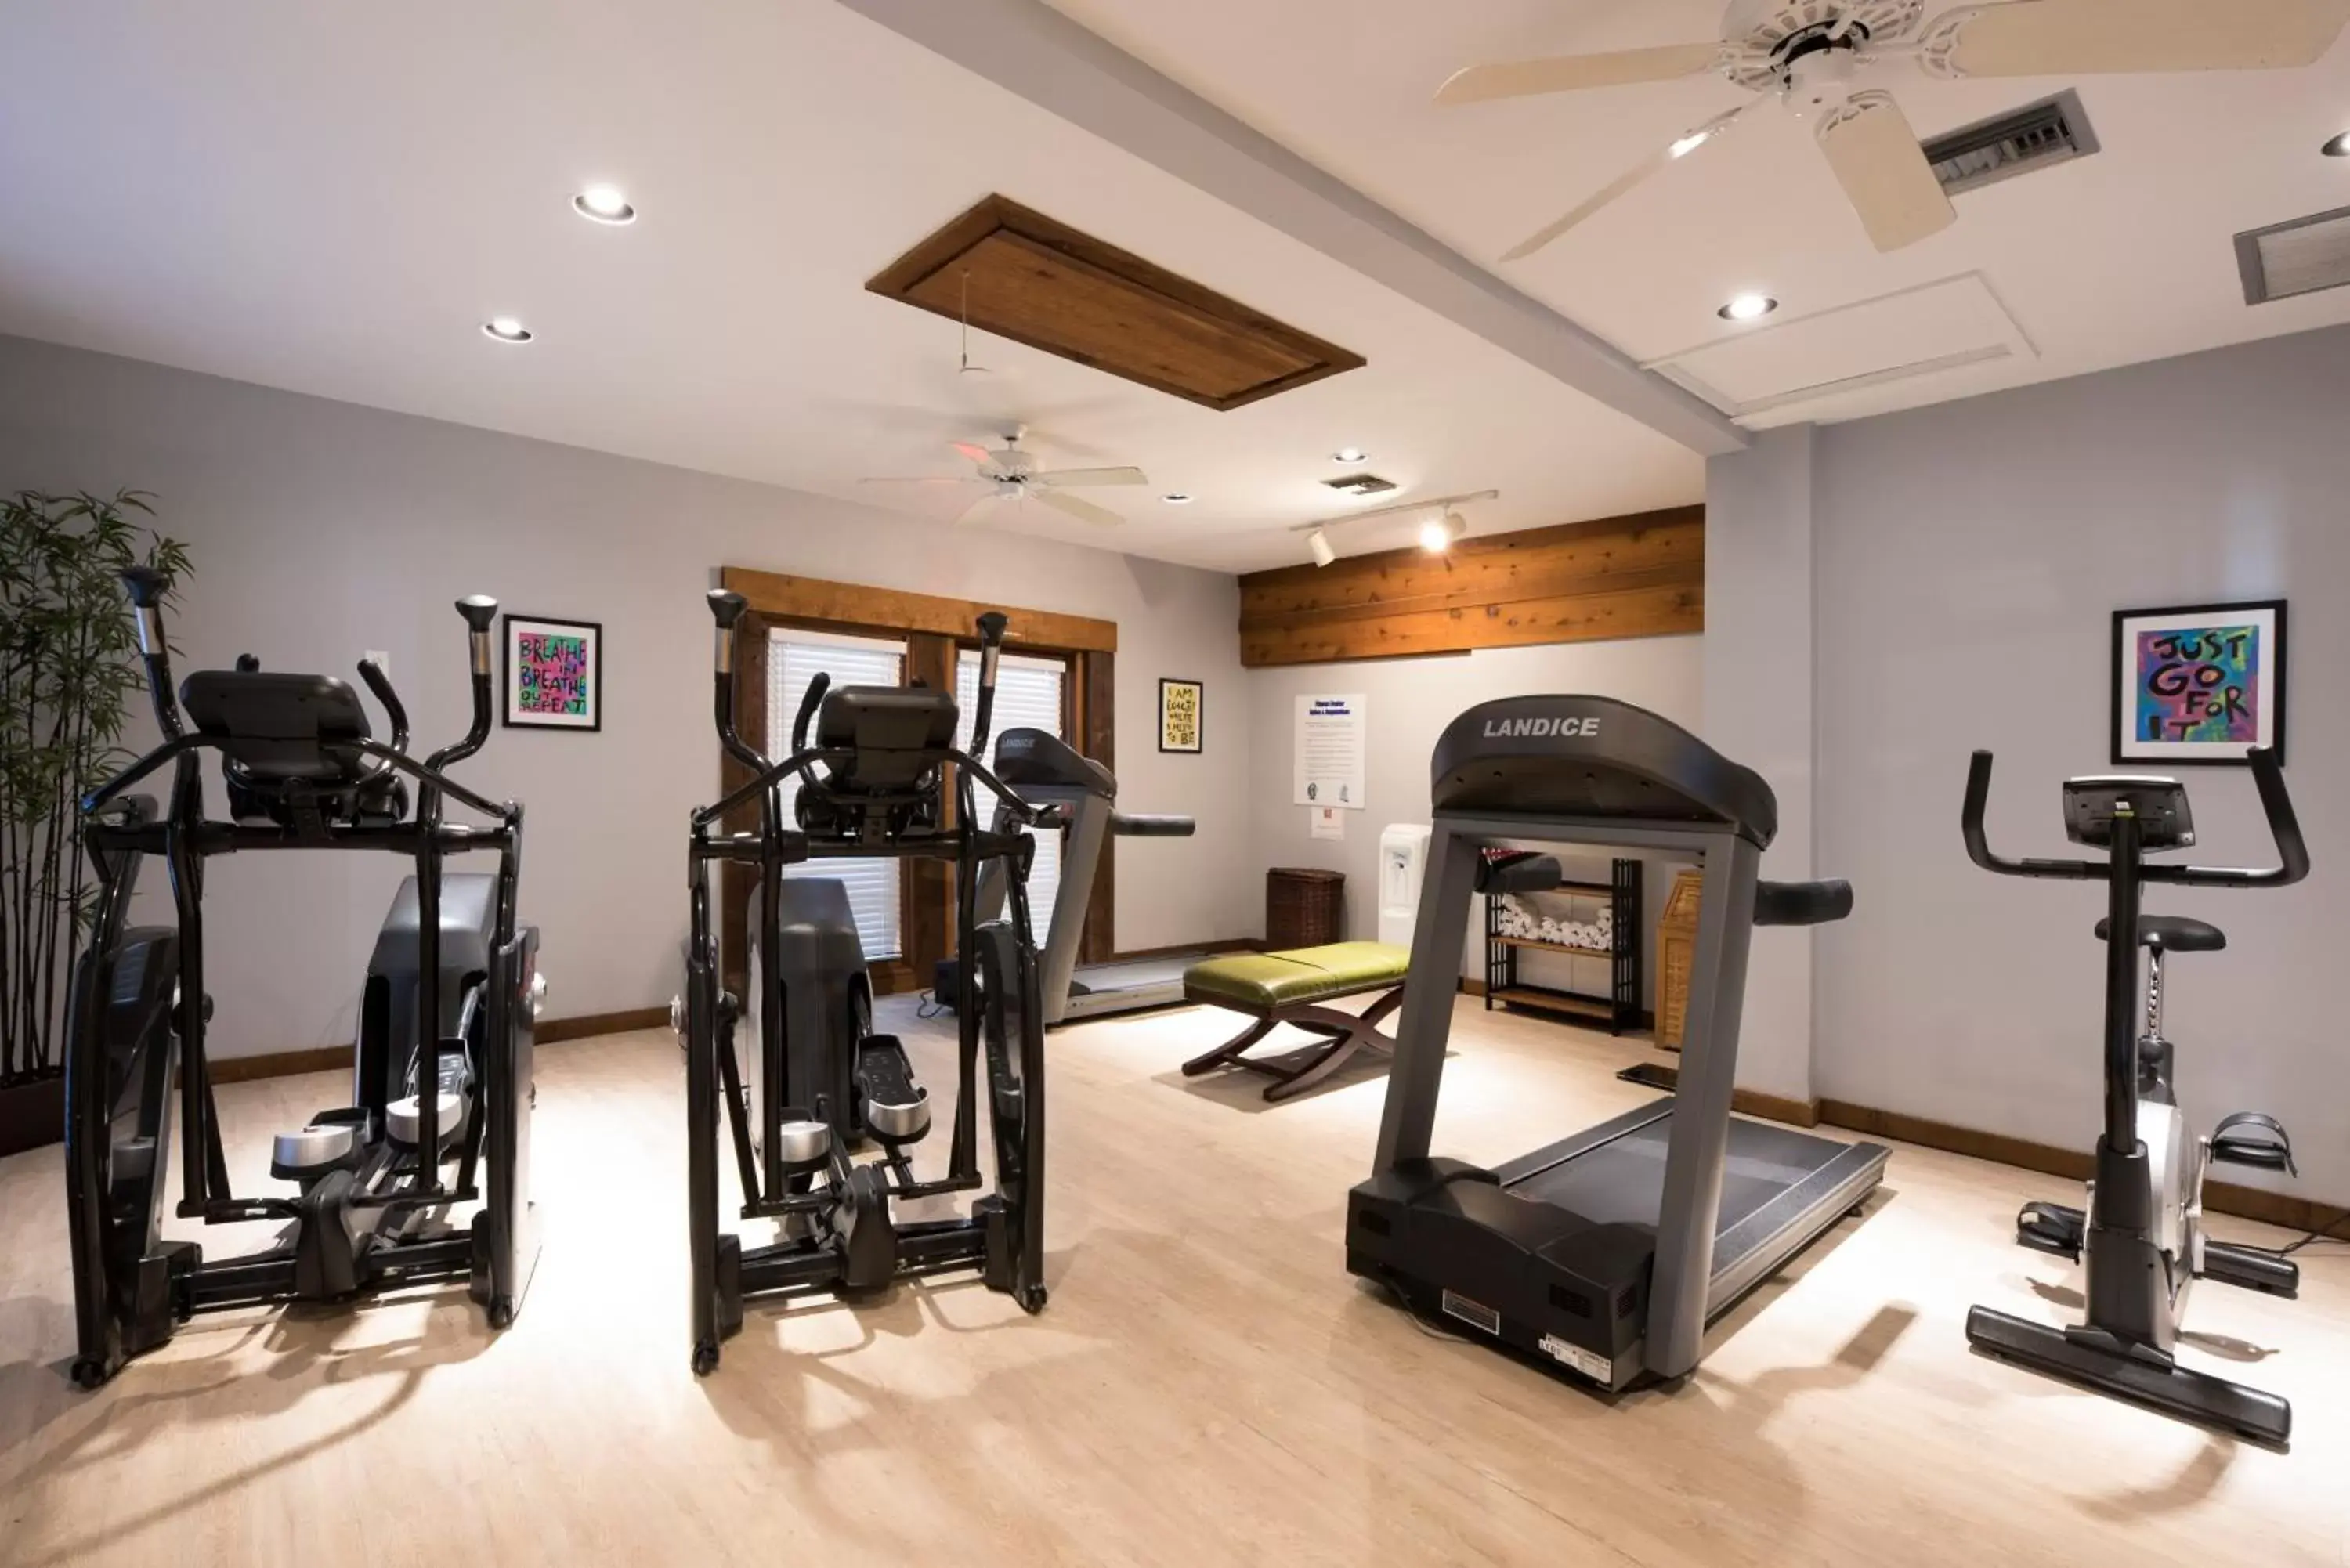 Fitness centre/facilities, Fitness Center/Facilities in Park Shore Resort by Sunstream